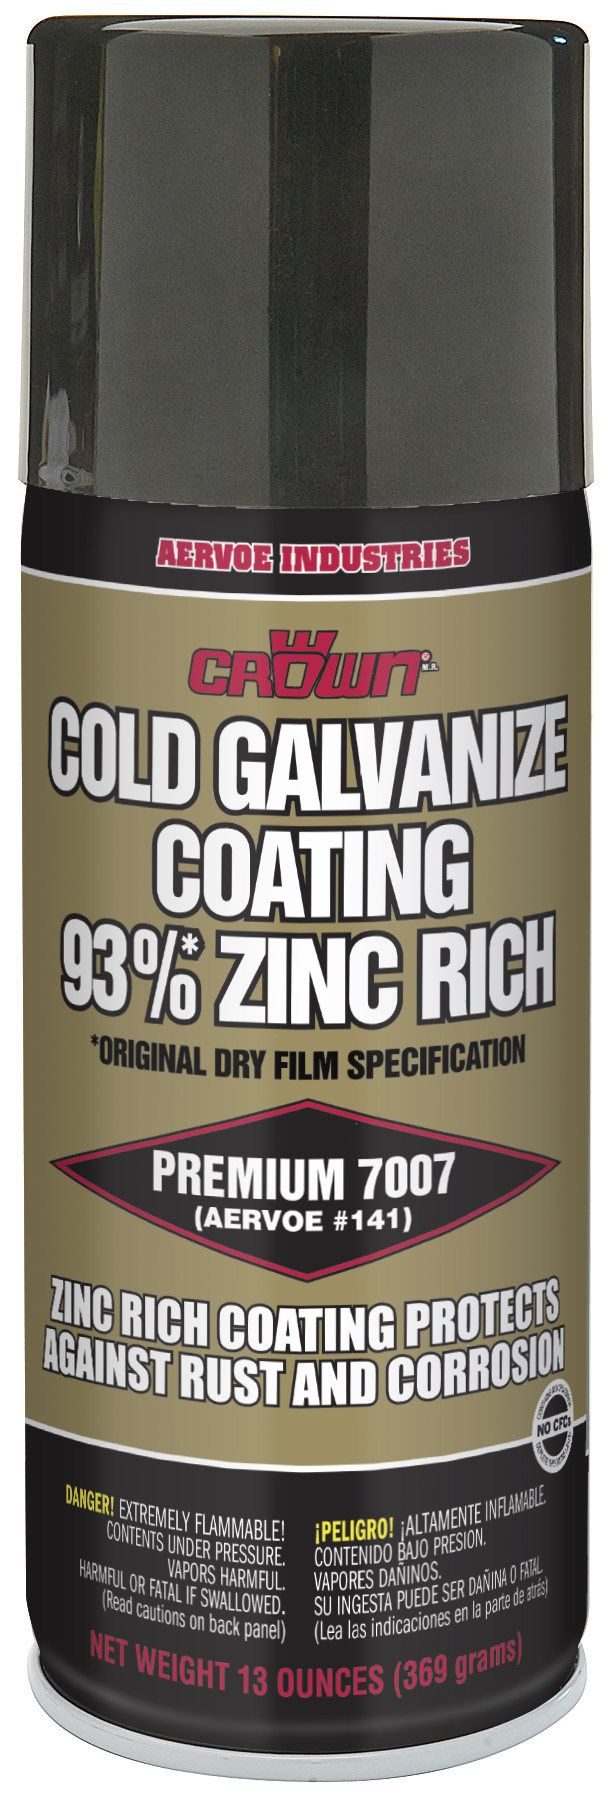 Zinc Rich Cold Galvanized Coating, Zinc Metallic Powder base/medium, Dry Film resin type, 16 oz. Aerosol Can, +200 DEG F temperature rating